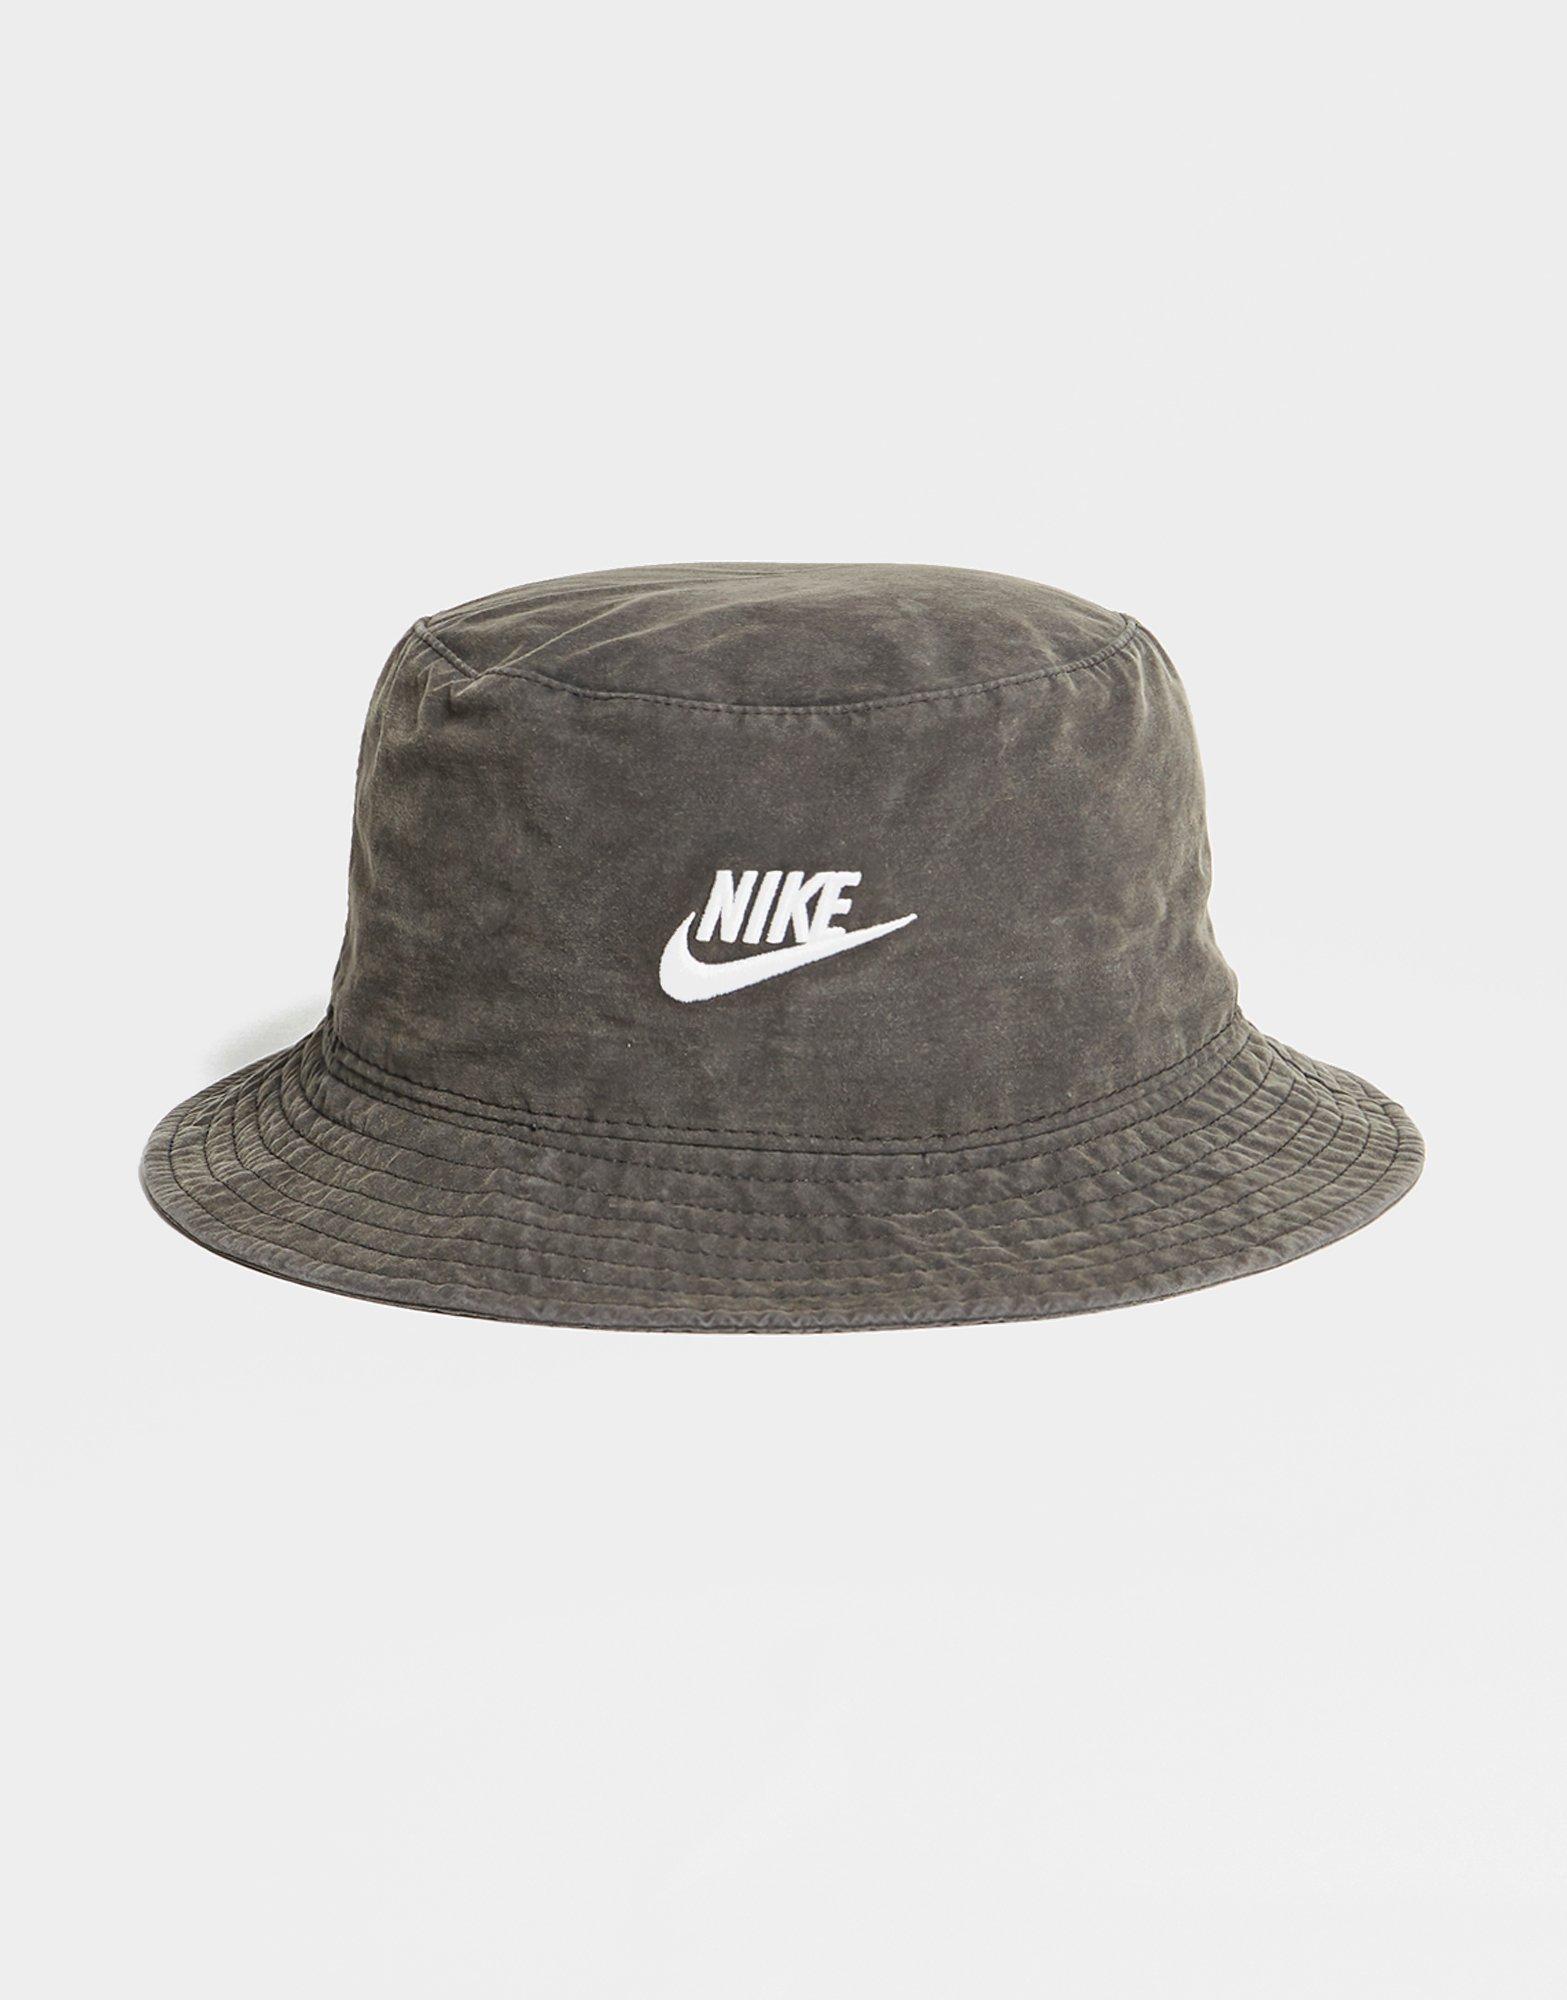 nike grey bucket hat